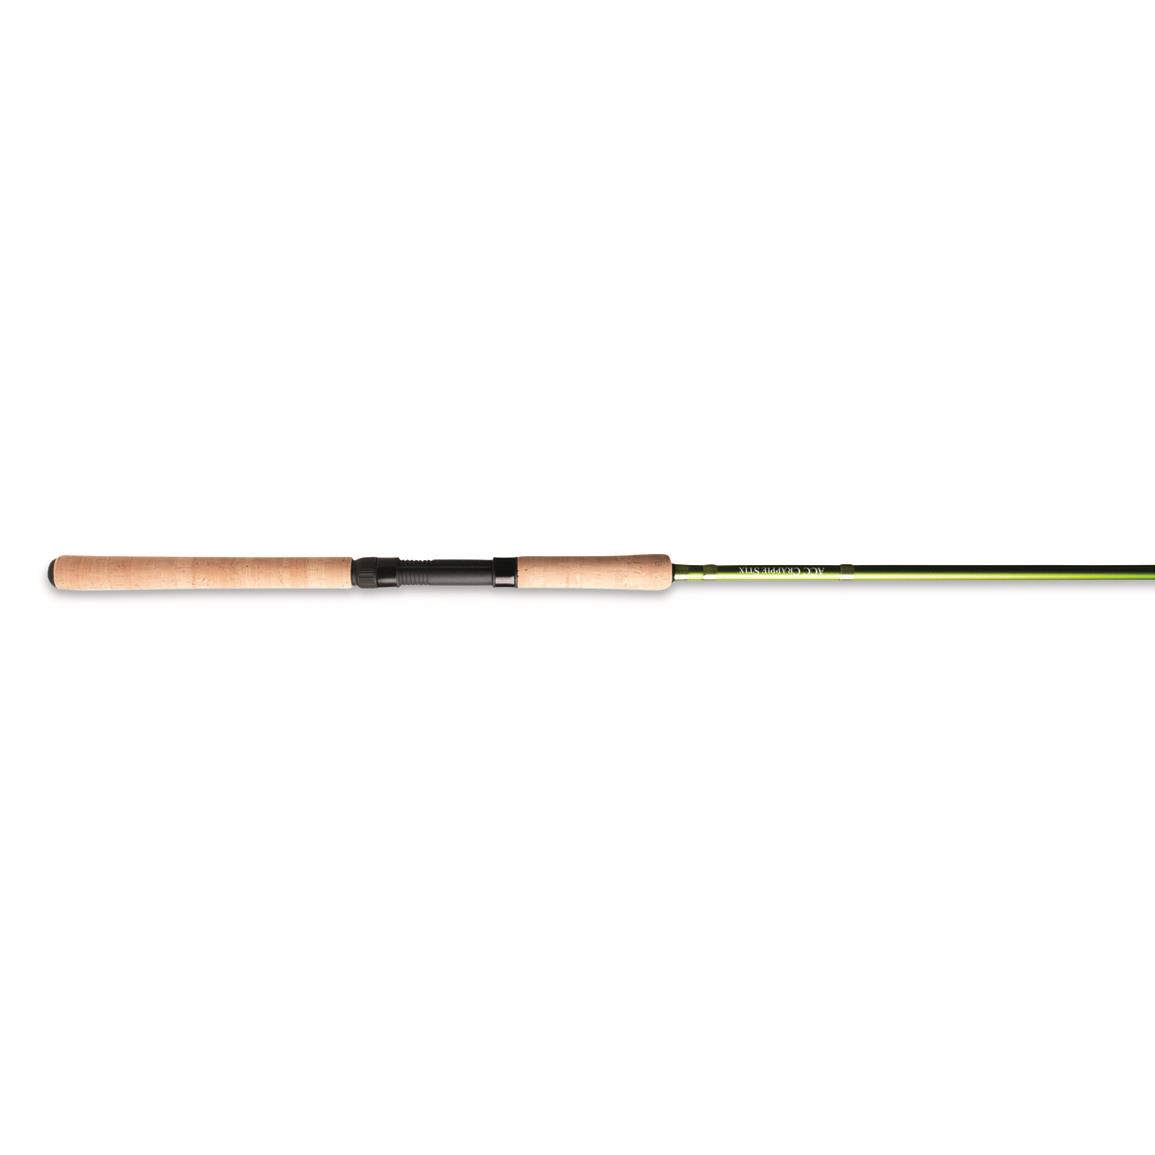 ACC Crappie Stix GS10M Green Series Jigging Rod, 10' Length, Medium Power, Moderate Action, 2 Pieces